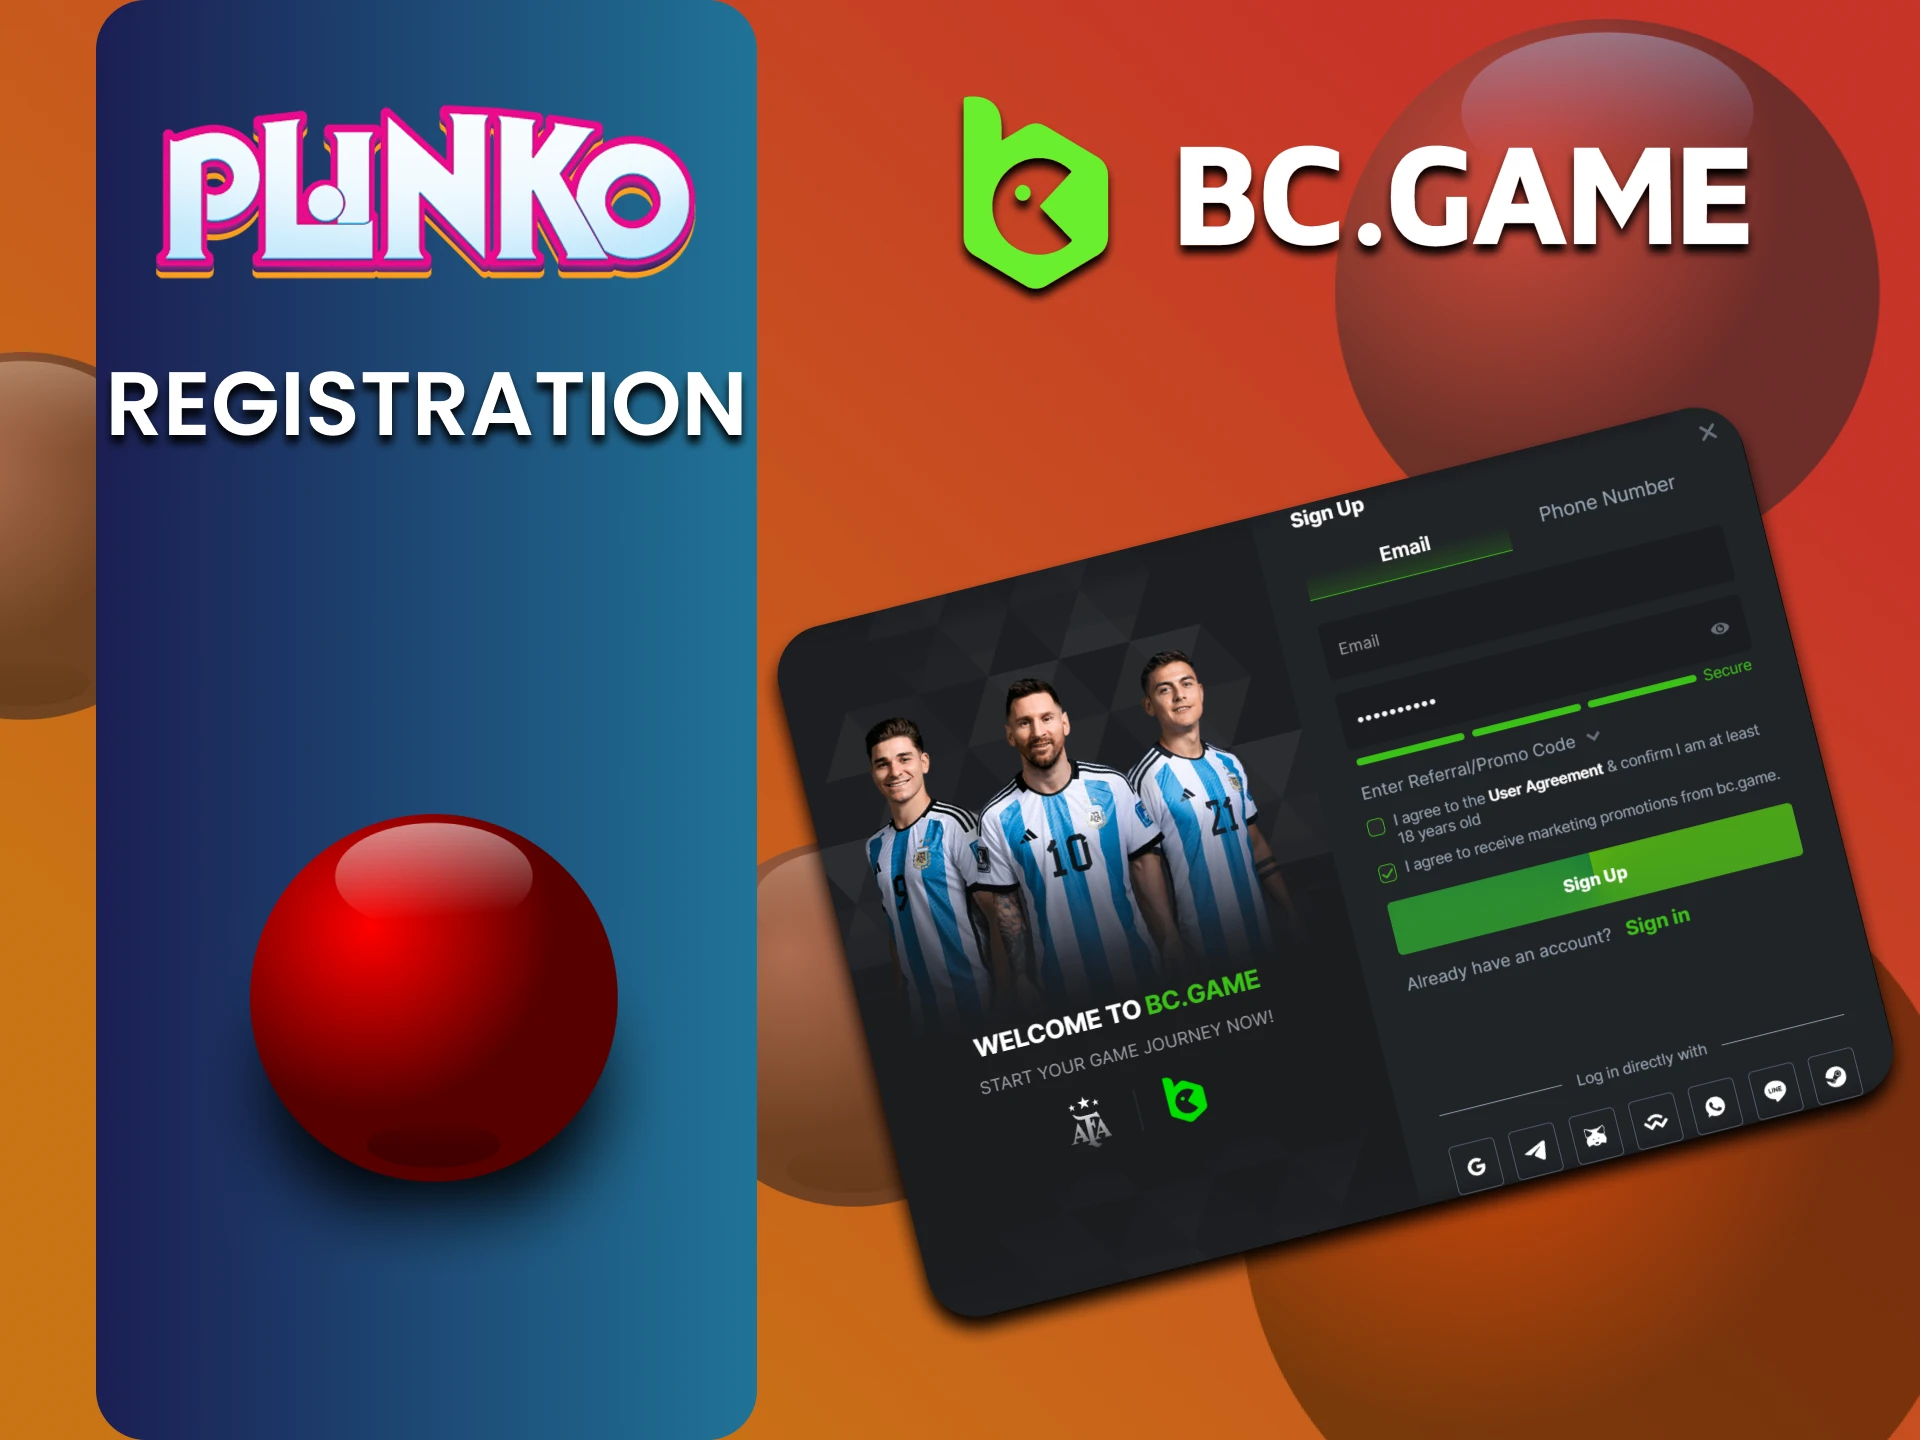 To play Plinko, register on BCGame.